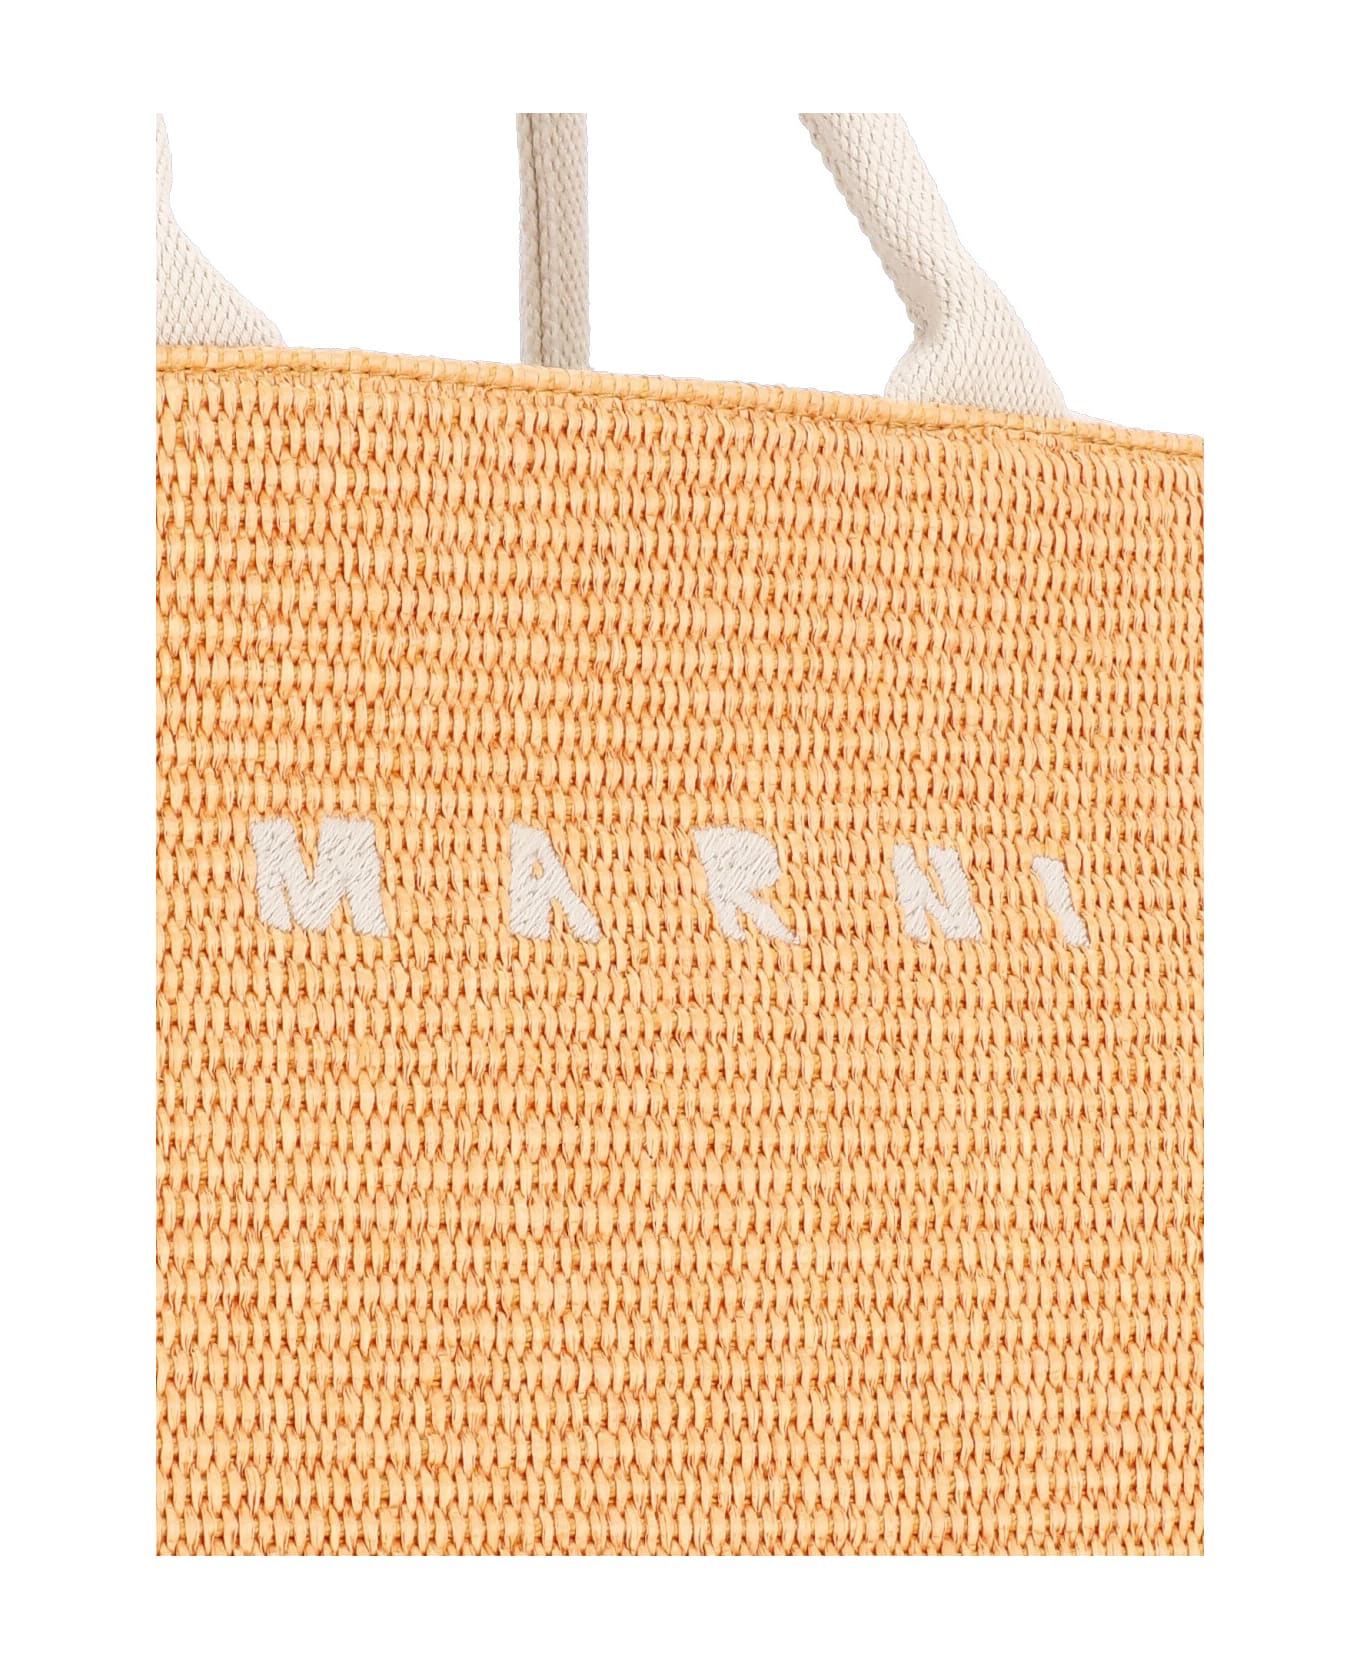 Marni Tote Bag With Logo - Orange